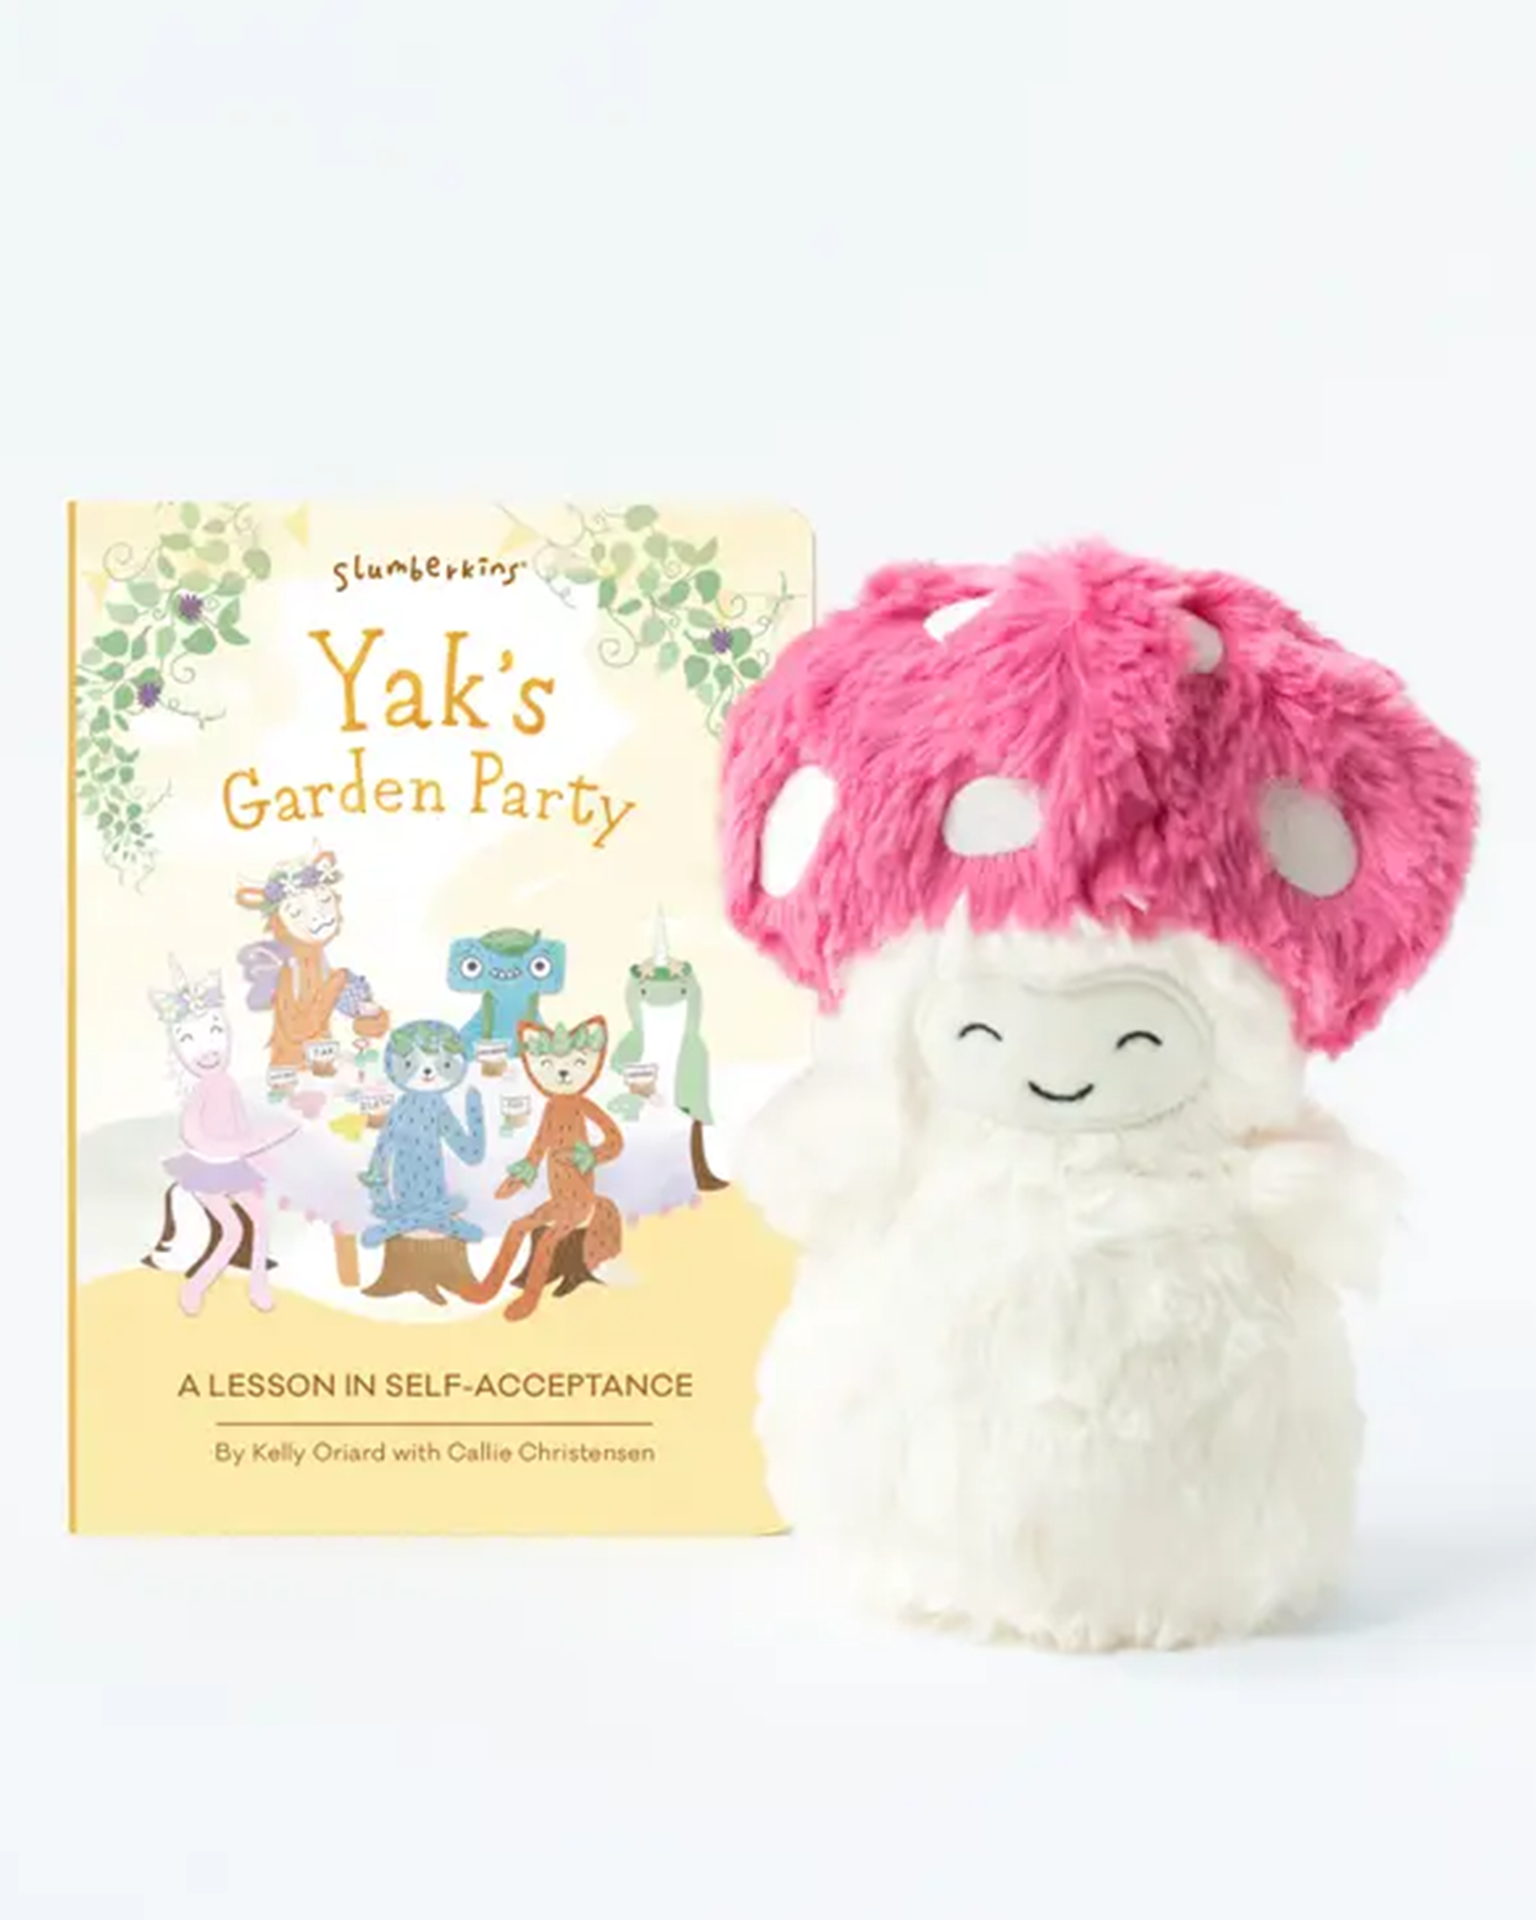 Little slumberkins play mushroom mini + yak's garden party book